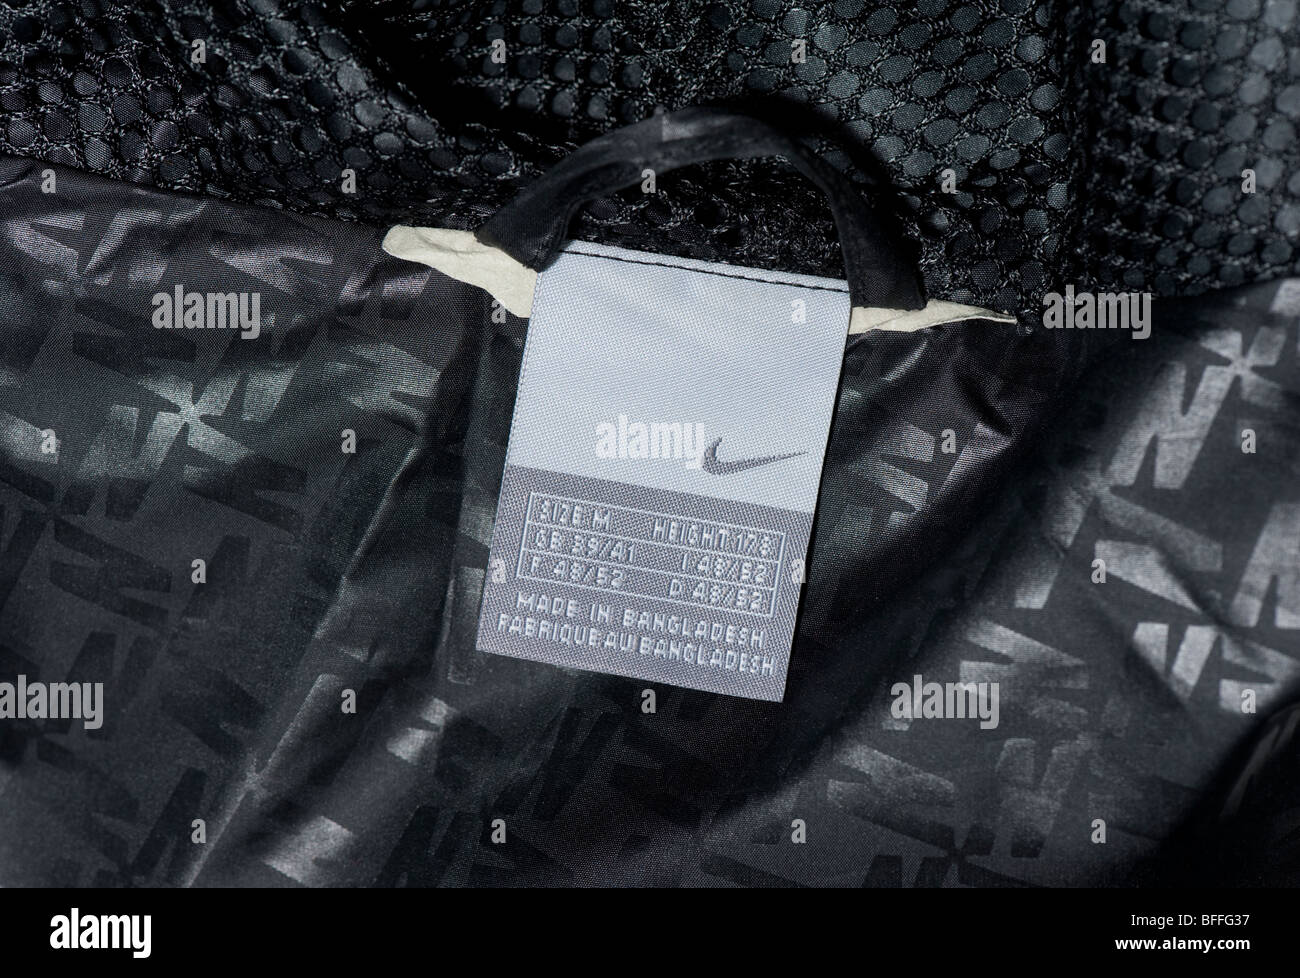 Nike windrunner clothing label in back of black mens rain jacket cagoule,  showing Nike tick logo Stock Photo - Alamy